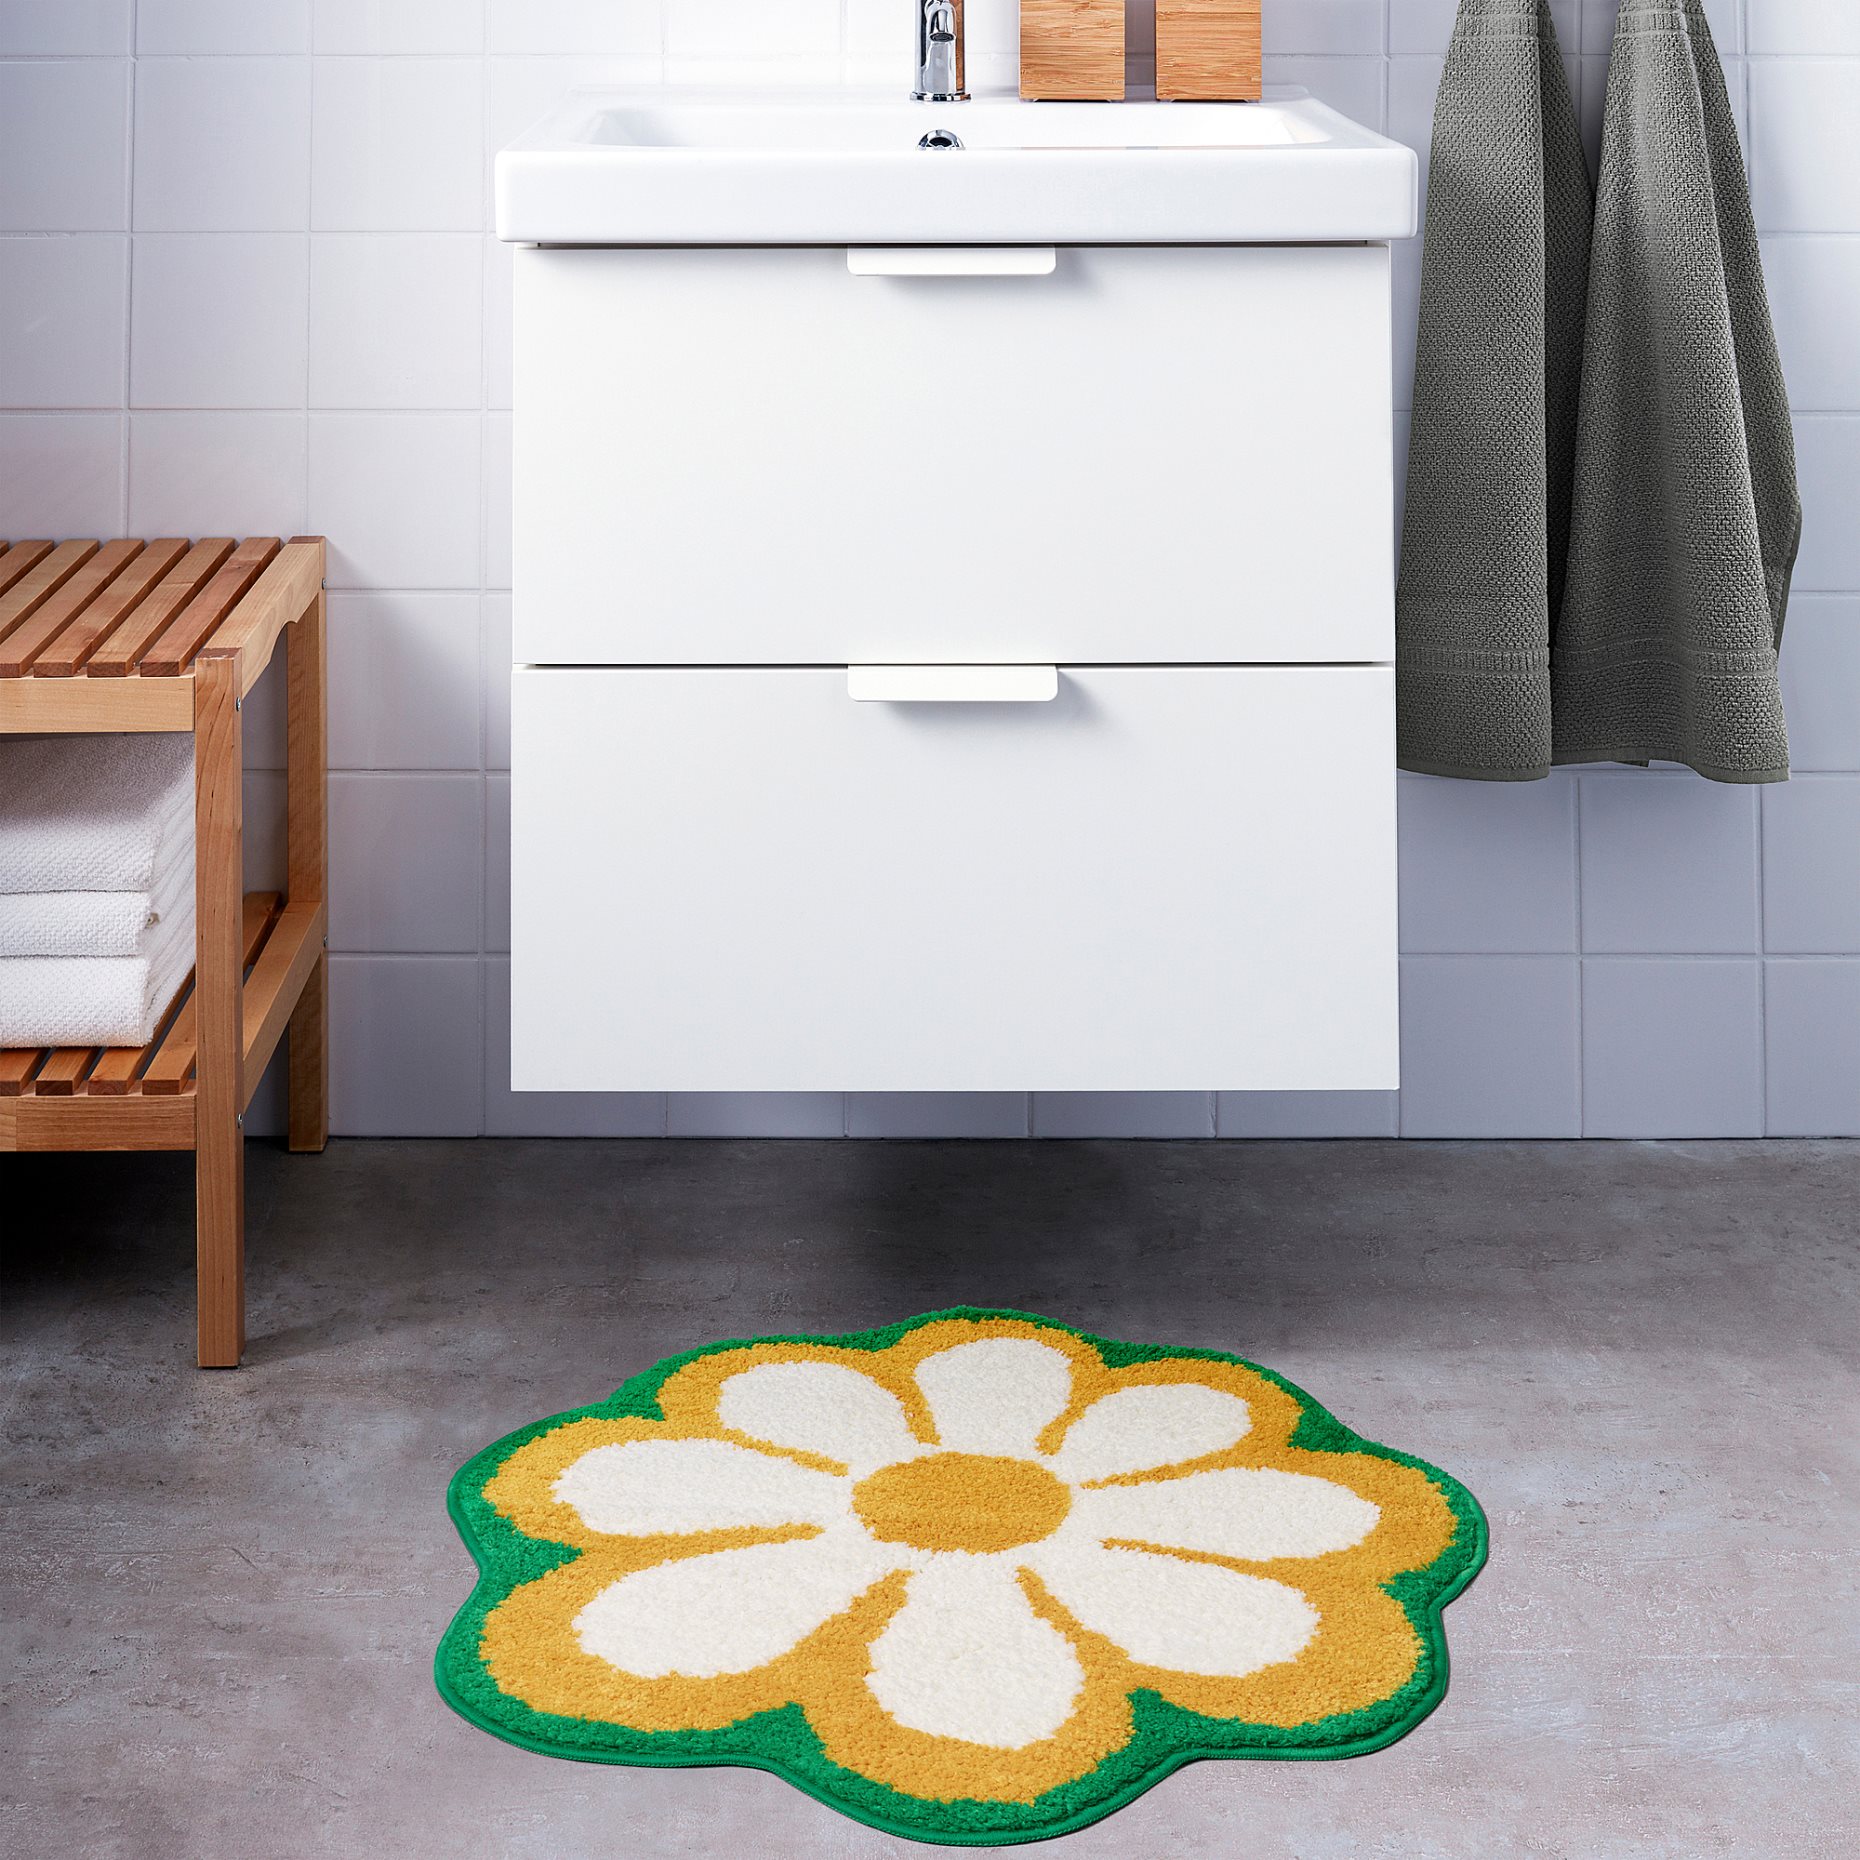 KÄRRKNIPPROT, bath mat/floral pattern, 65 cm, 505.575.29